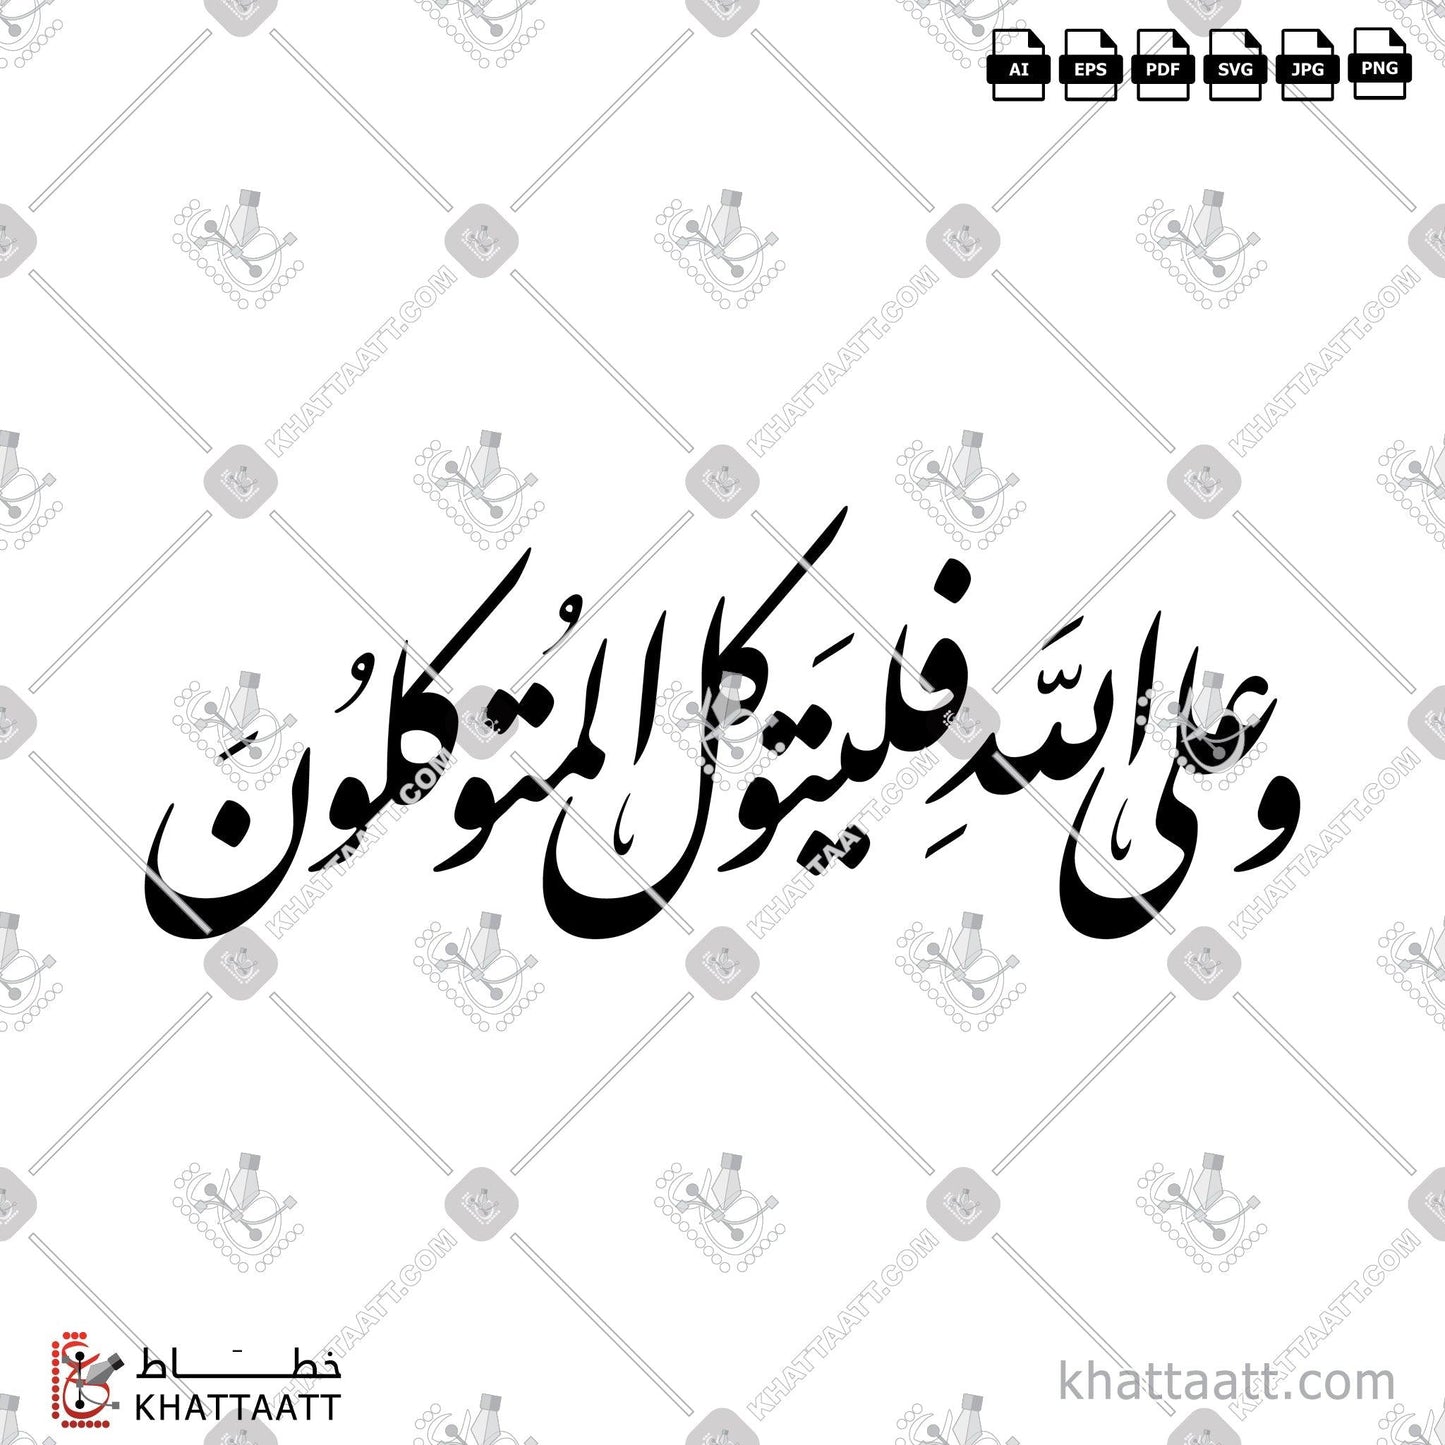 Download Arabic Calligraphy of وعلى الله فليتوكل المتوكلون in Farsi - الخط الفارسي in vector and .png